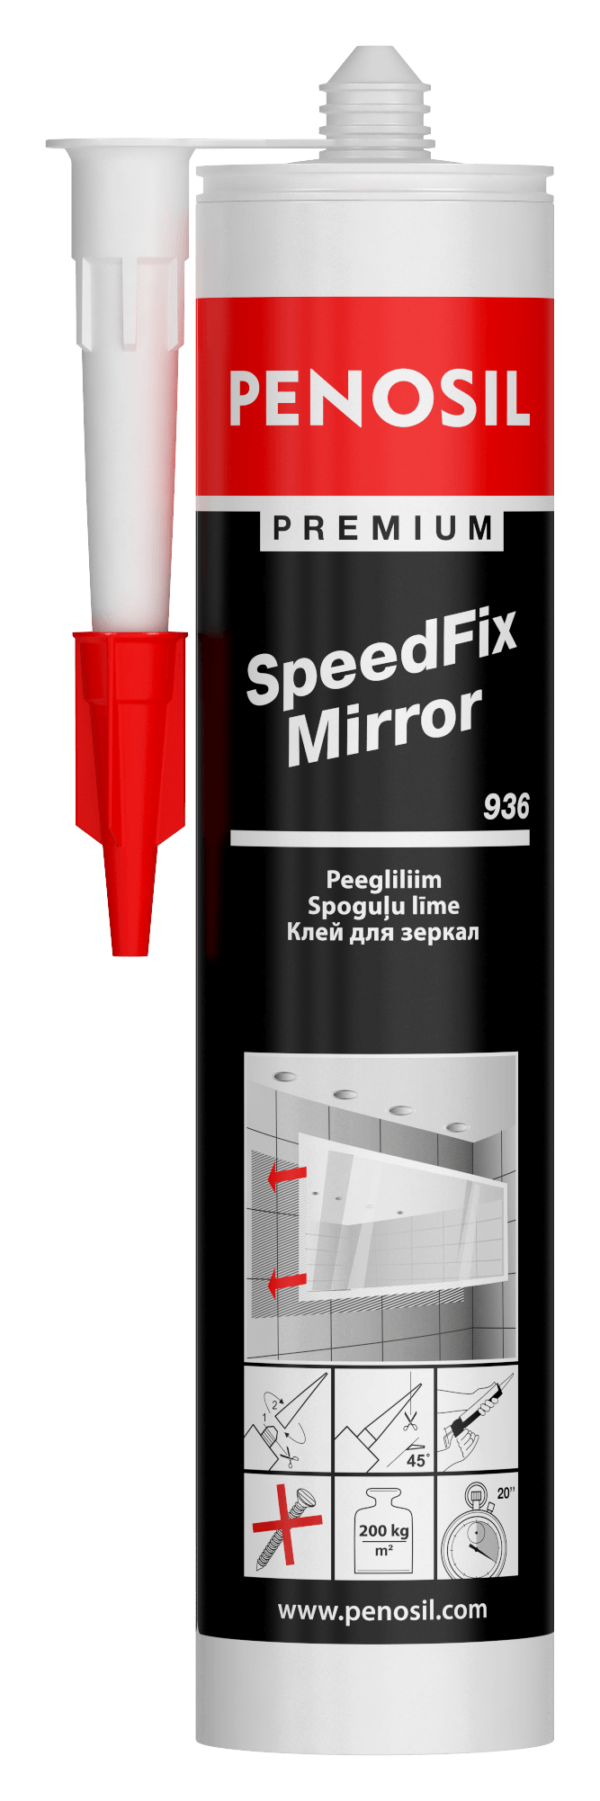 PENOSIL Premium SpeedFix Mirror 936 lepidlo na zrcadla